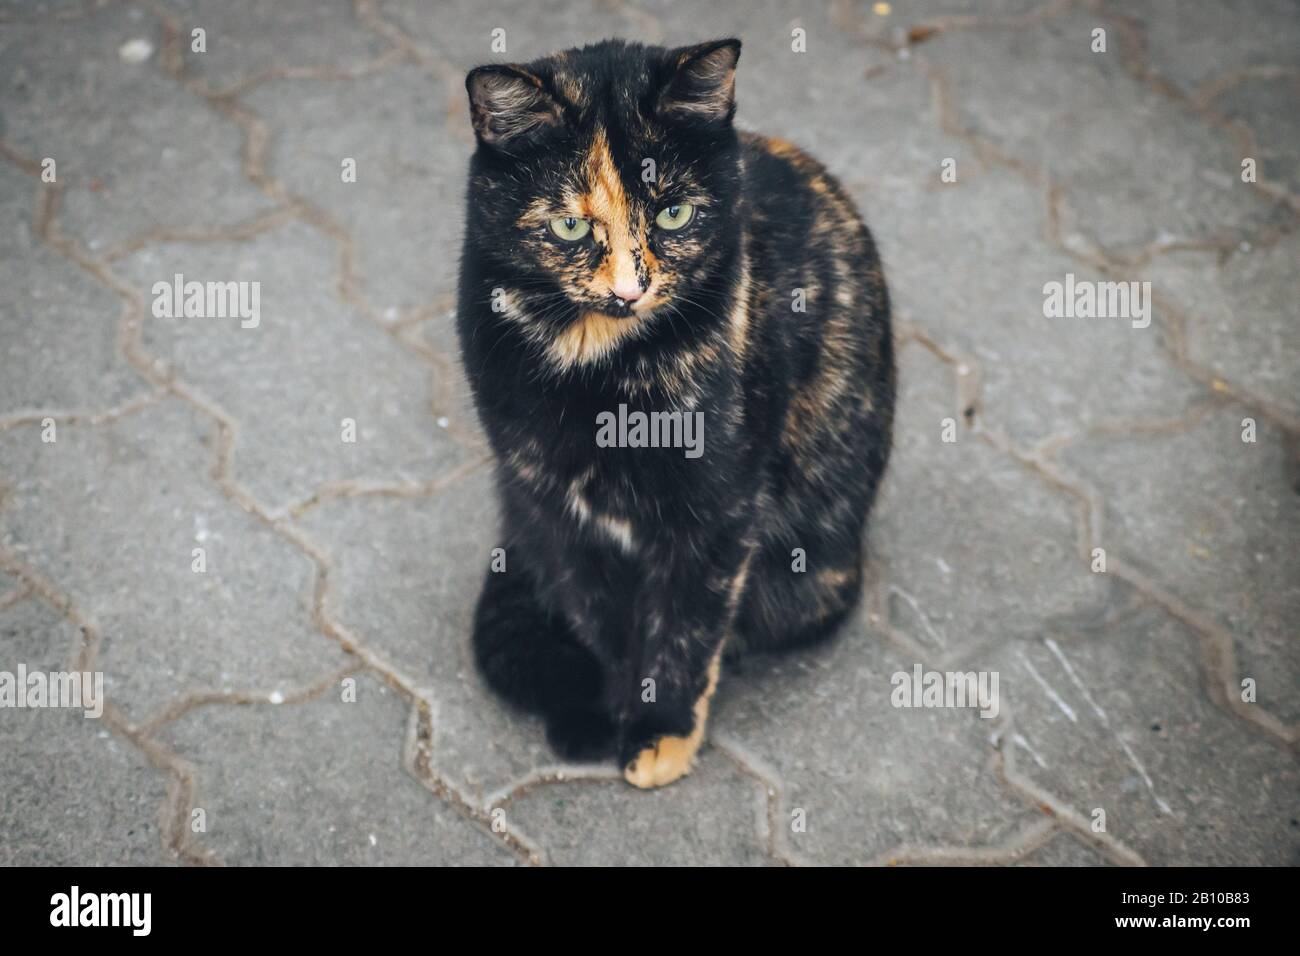 Funny orange black cat sitting on the concrete Stock Photo